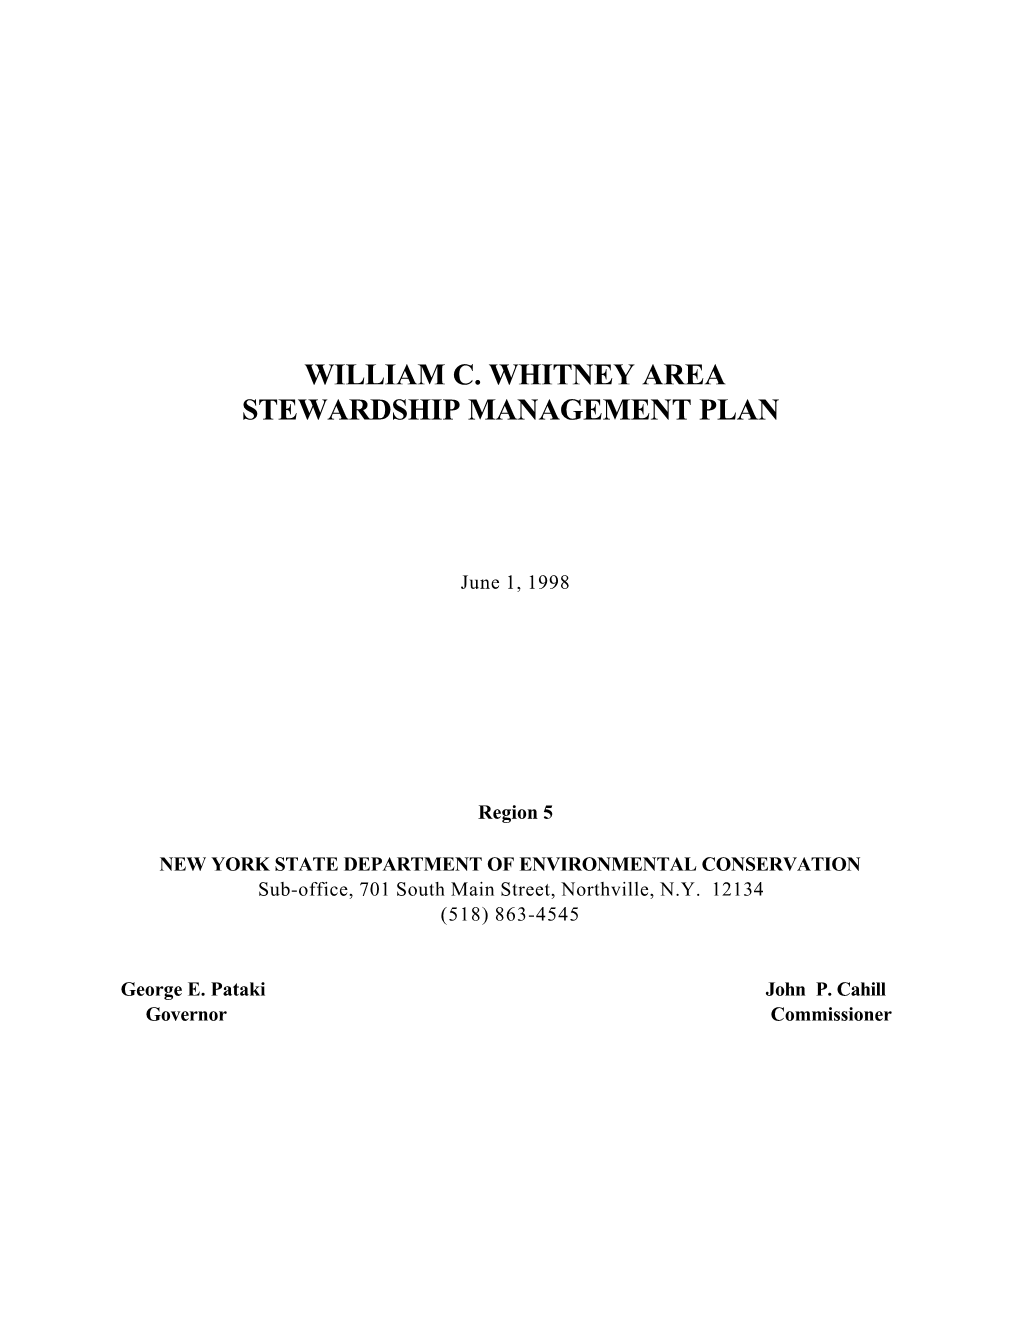 William C. Whitney Area Stewardship Management Plan